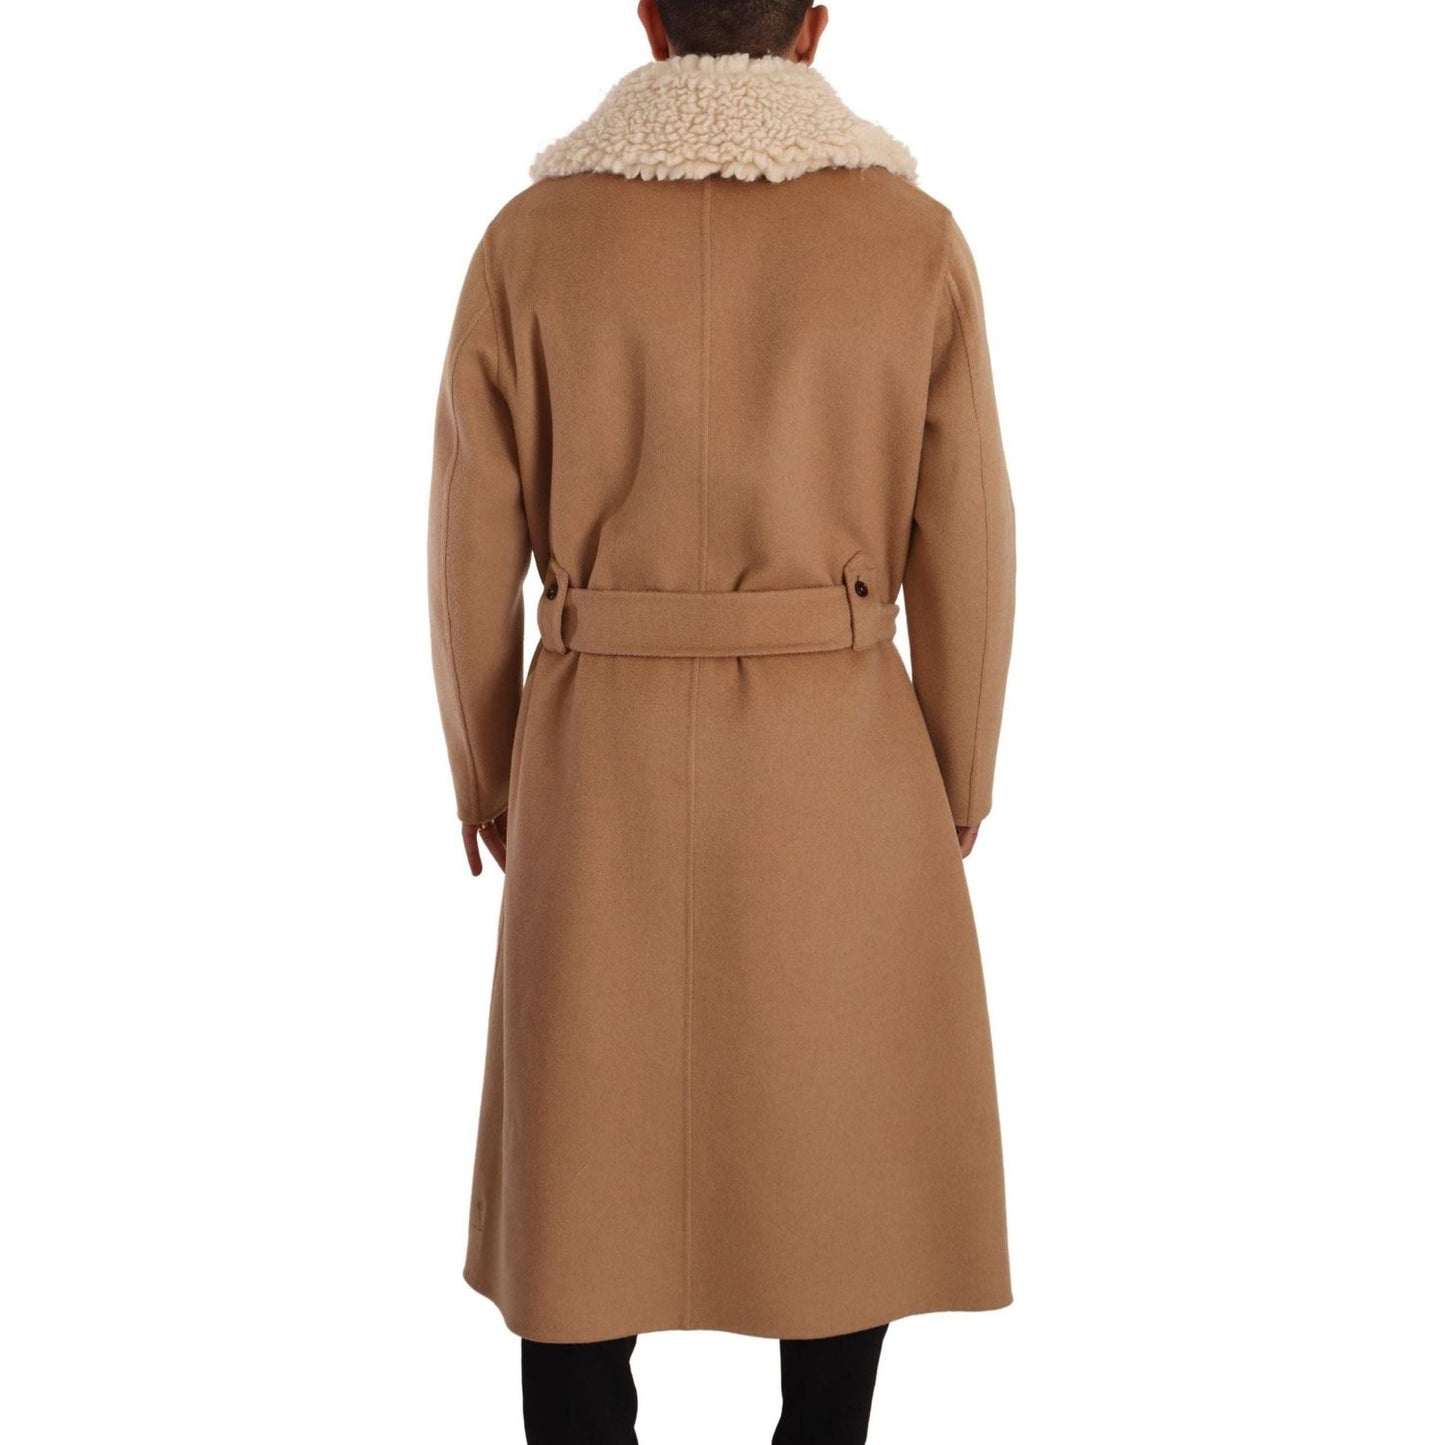 Dolce & Gabbana Opulent Beige Shearling-Collar Overcoat beige-camel-skin-cashmere-shearling-overcoat-jacket IMG_5027-scaled-60e390a5-ab1.jpg